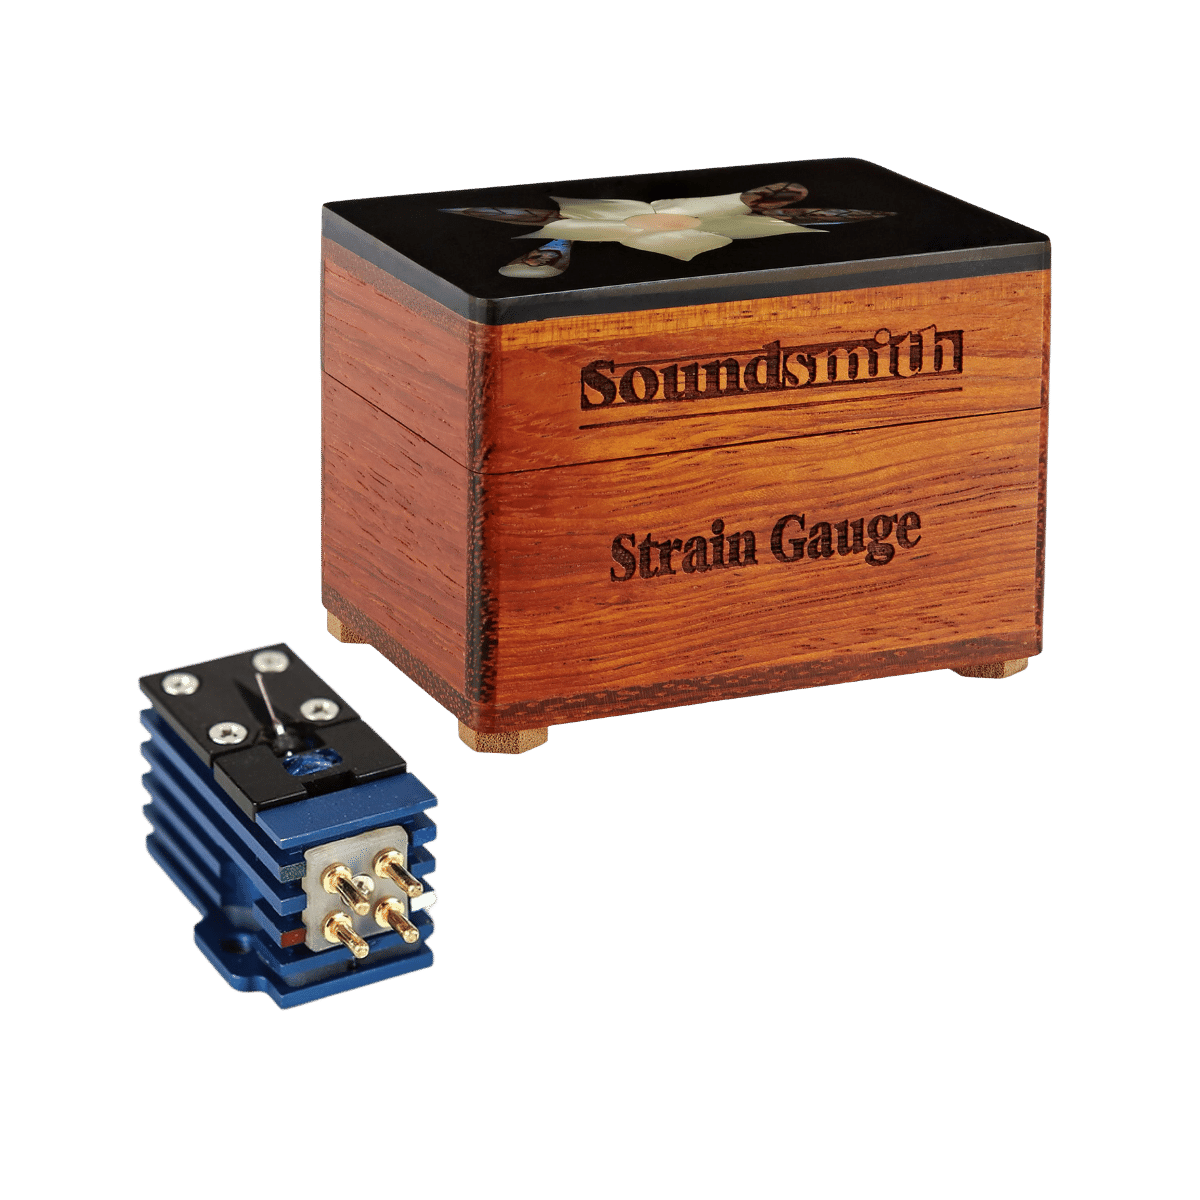 Soundsmith SG-200 Strain Gauge System